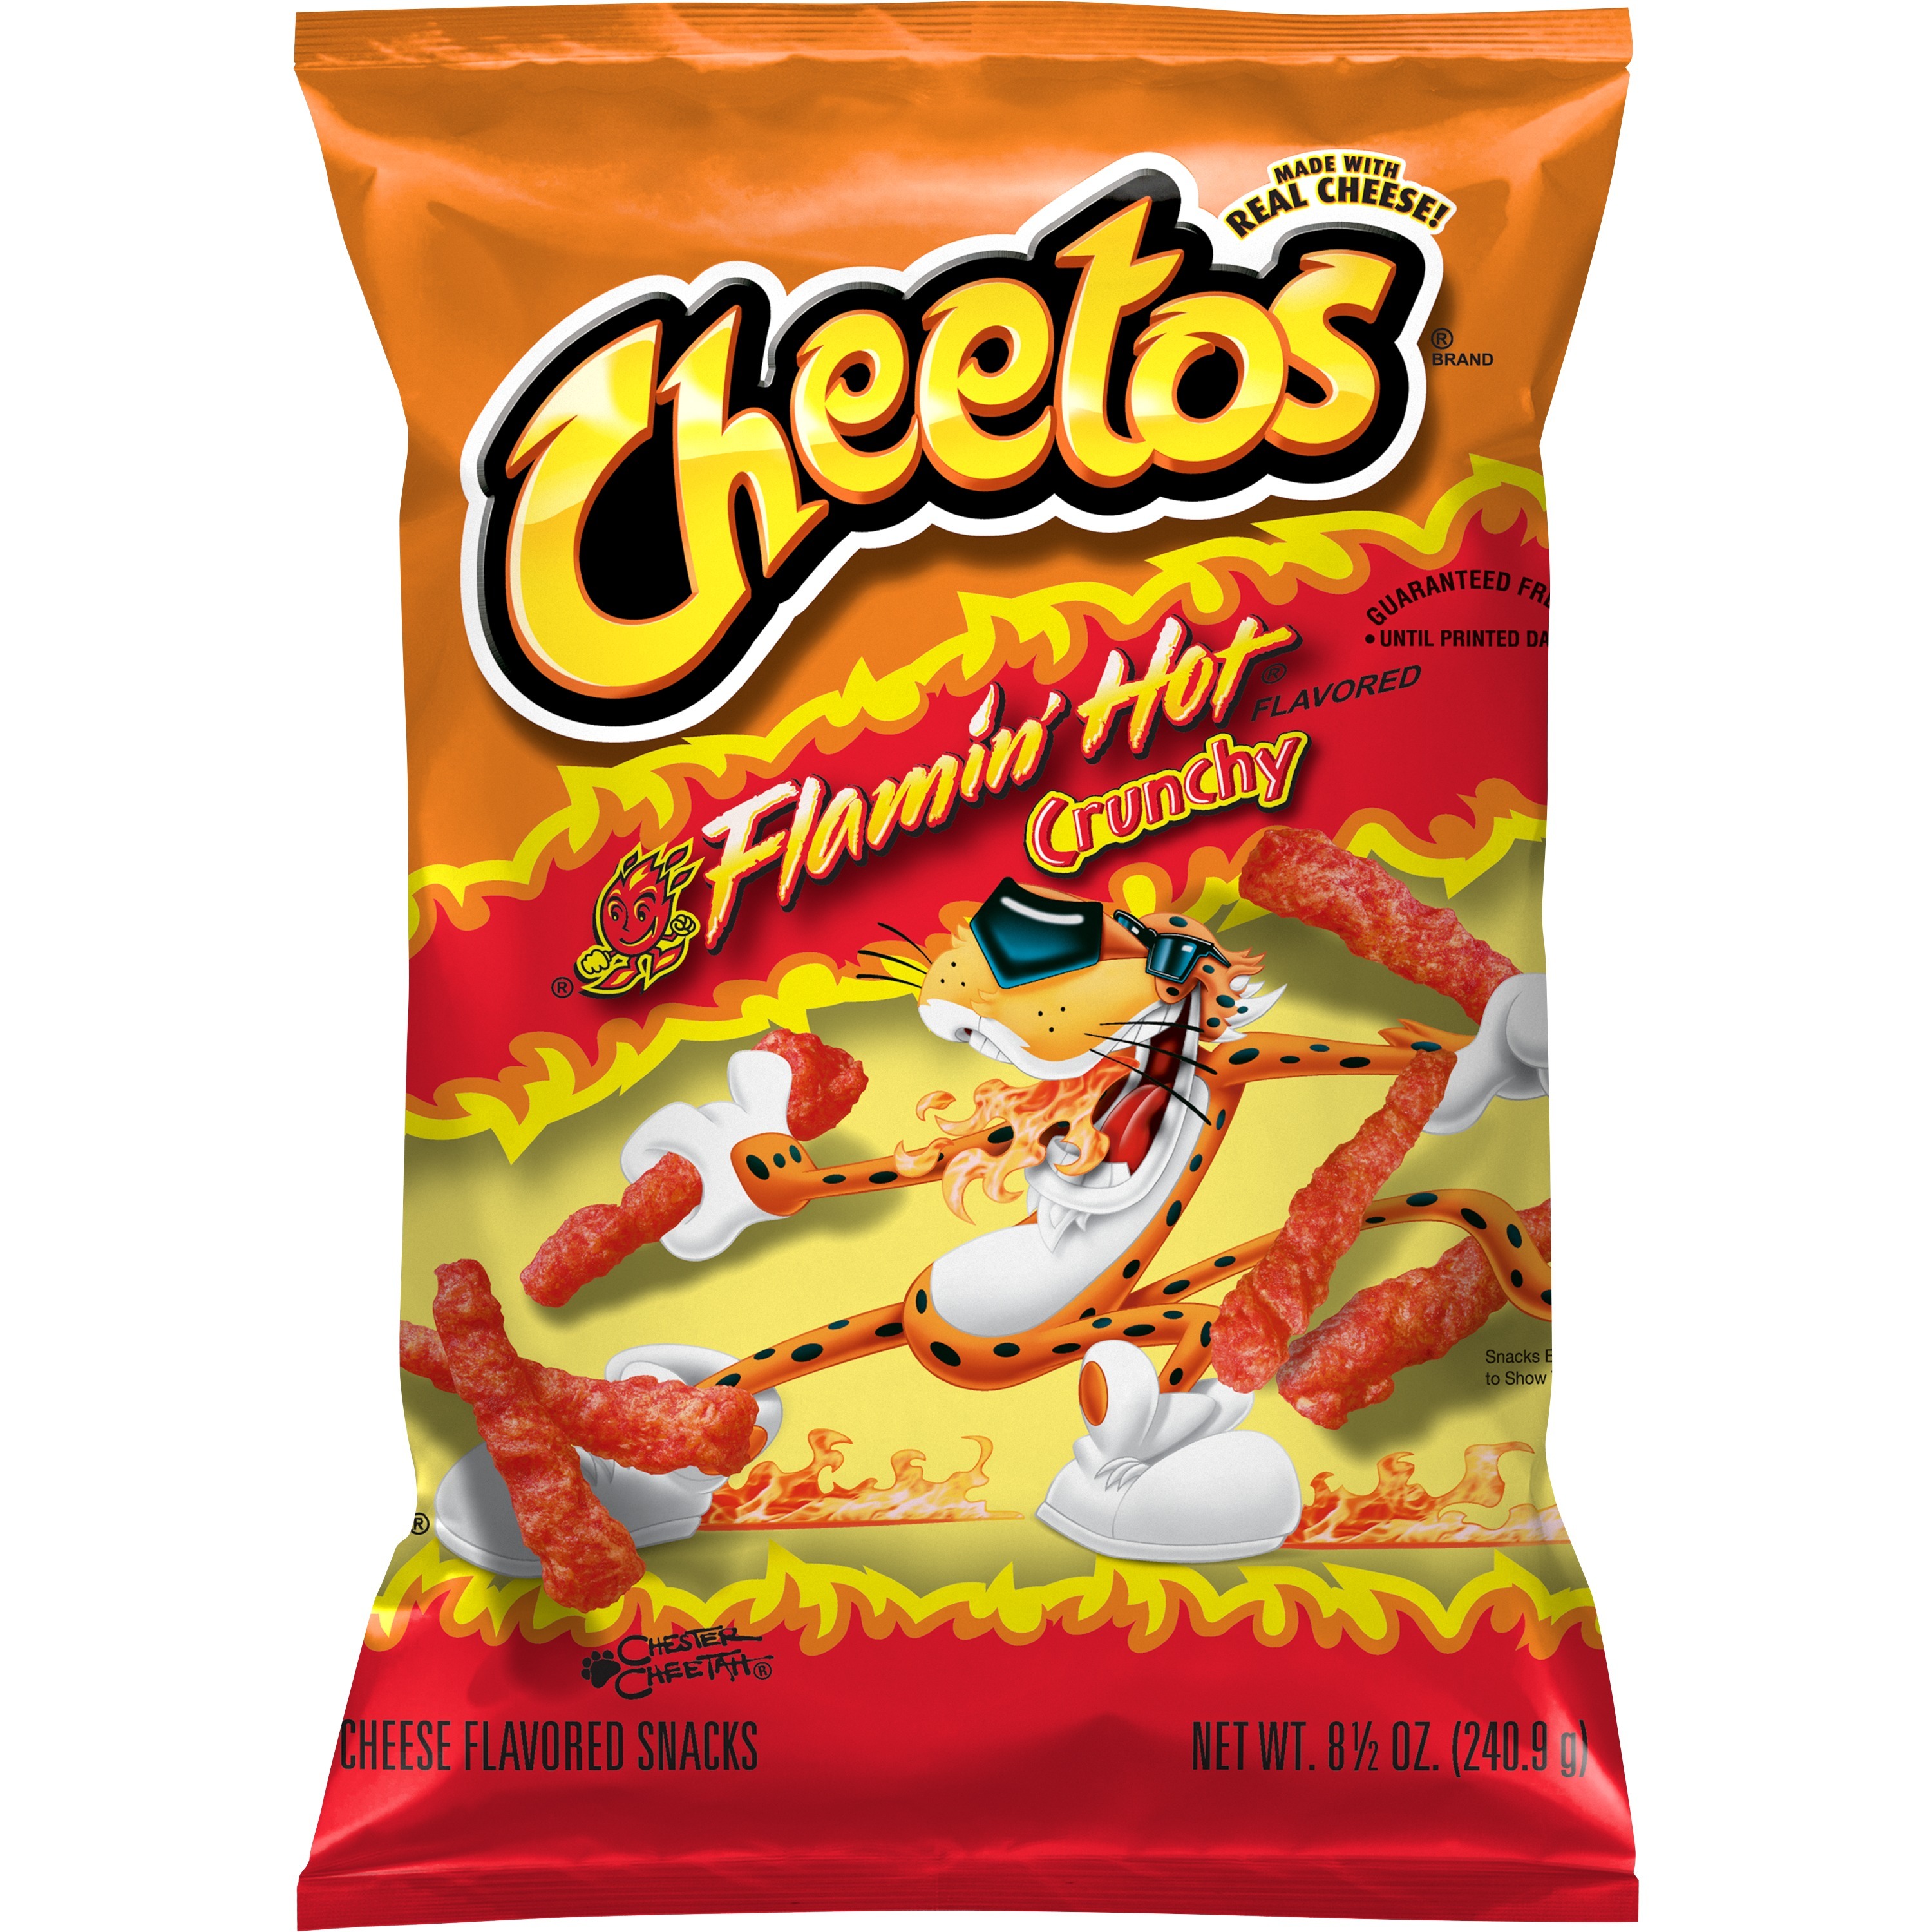 Cheetos Crunchy, Flamin' Hot, 8.5oz Bag, Snack Chips - image 4 of 9